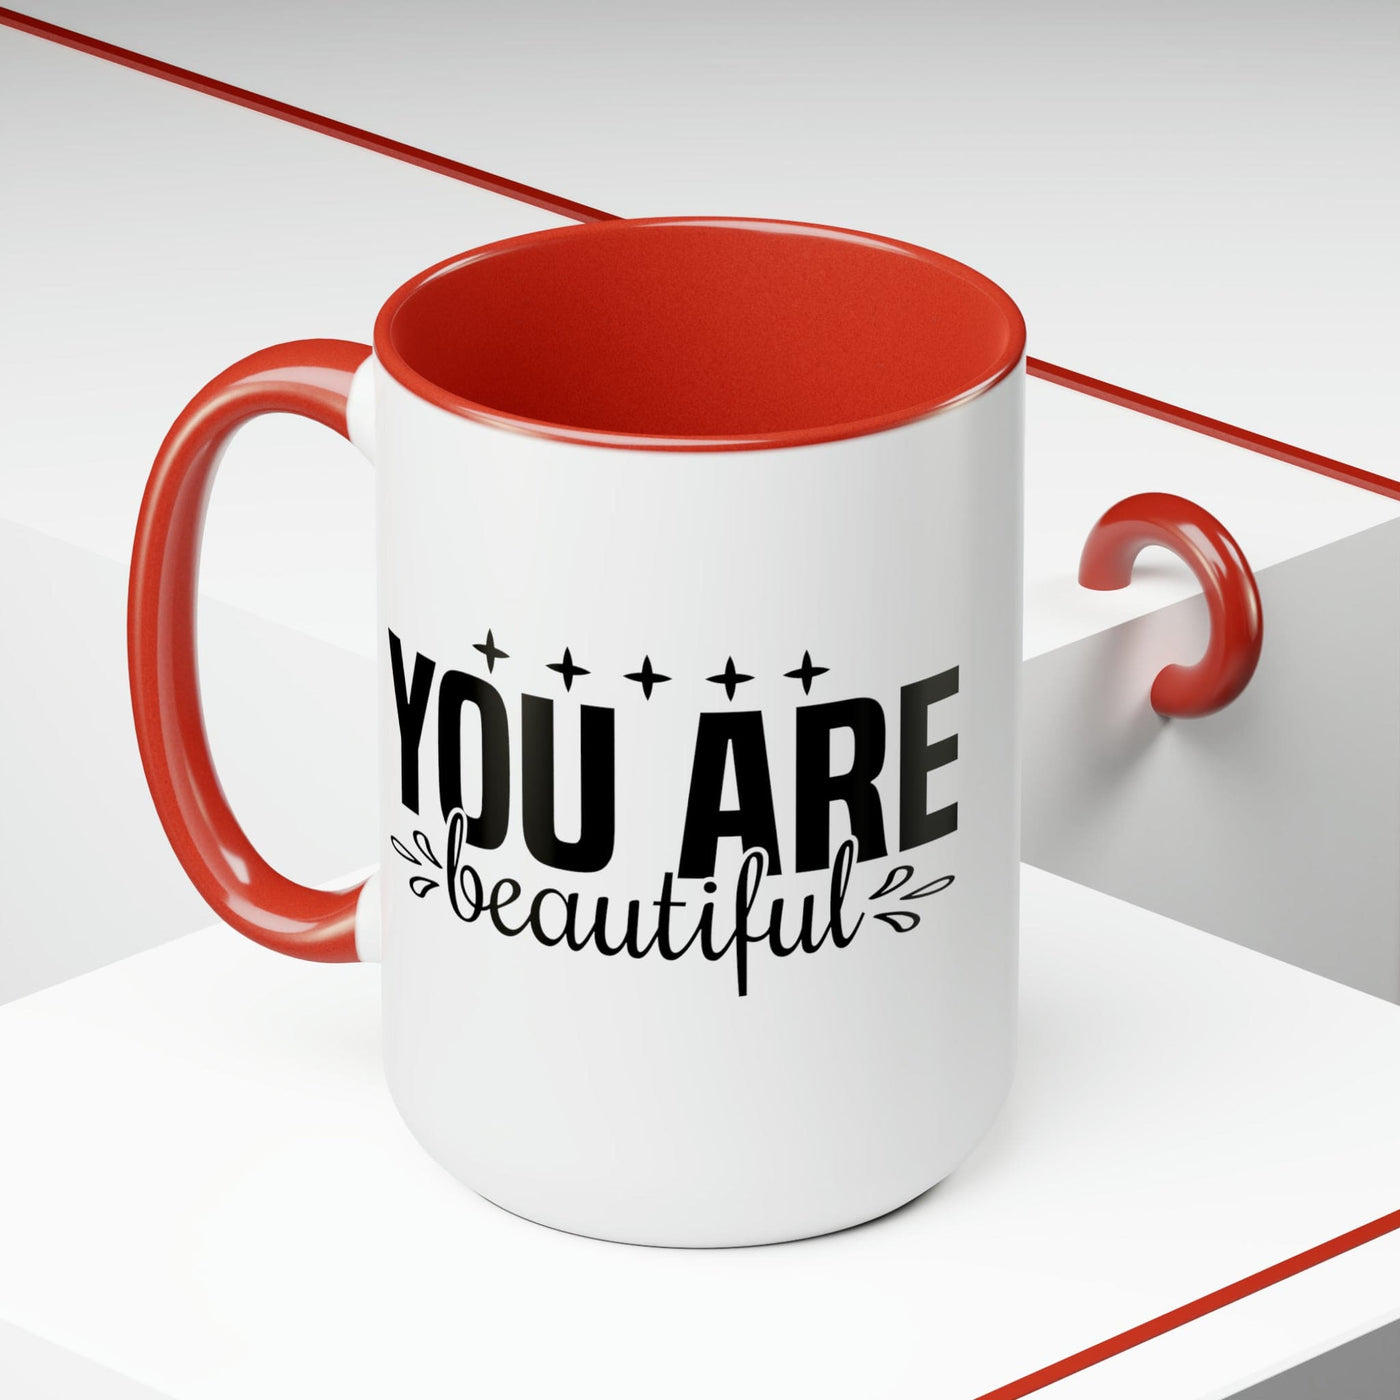 Accent Ceramic Coffee Mug 15oz - You Are Beautiful - Inspiration Affirmation